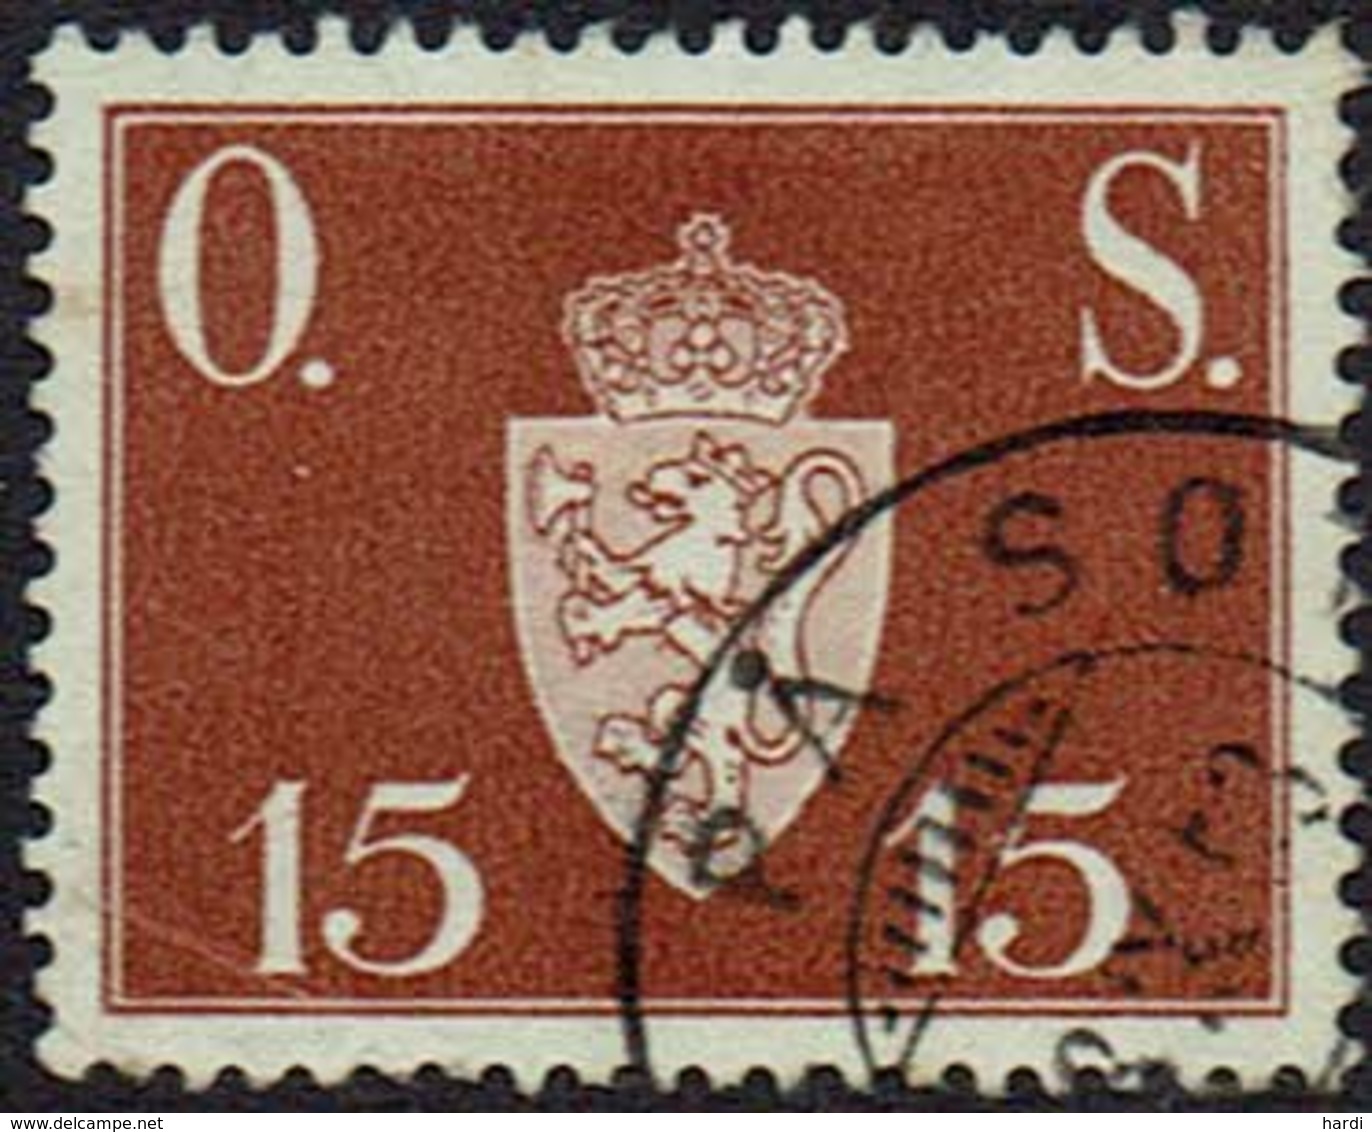 Norwegen DM, 1951, MiNr 63, Gestempelt - Service